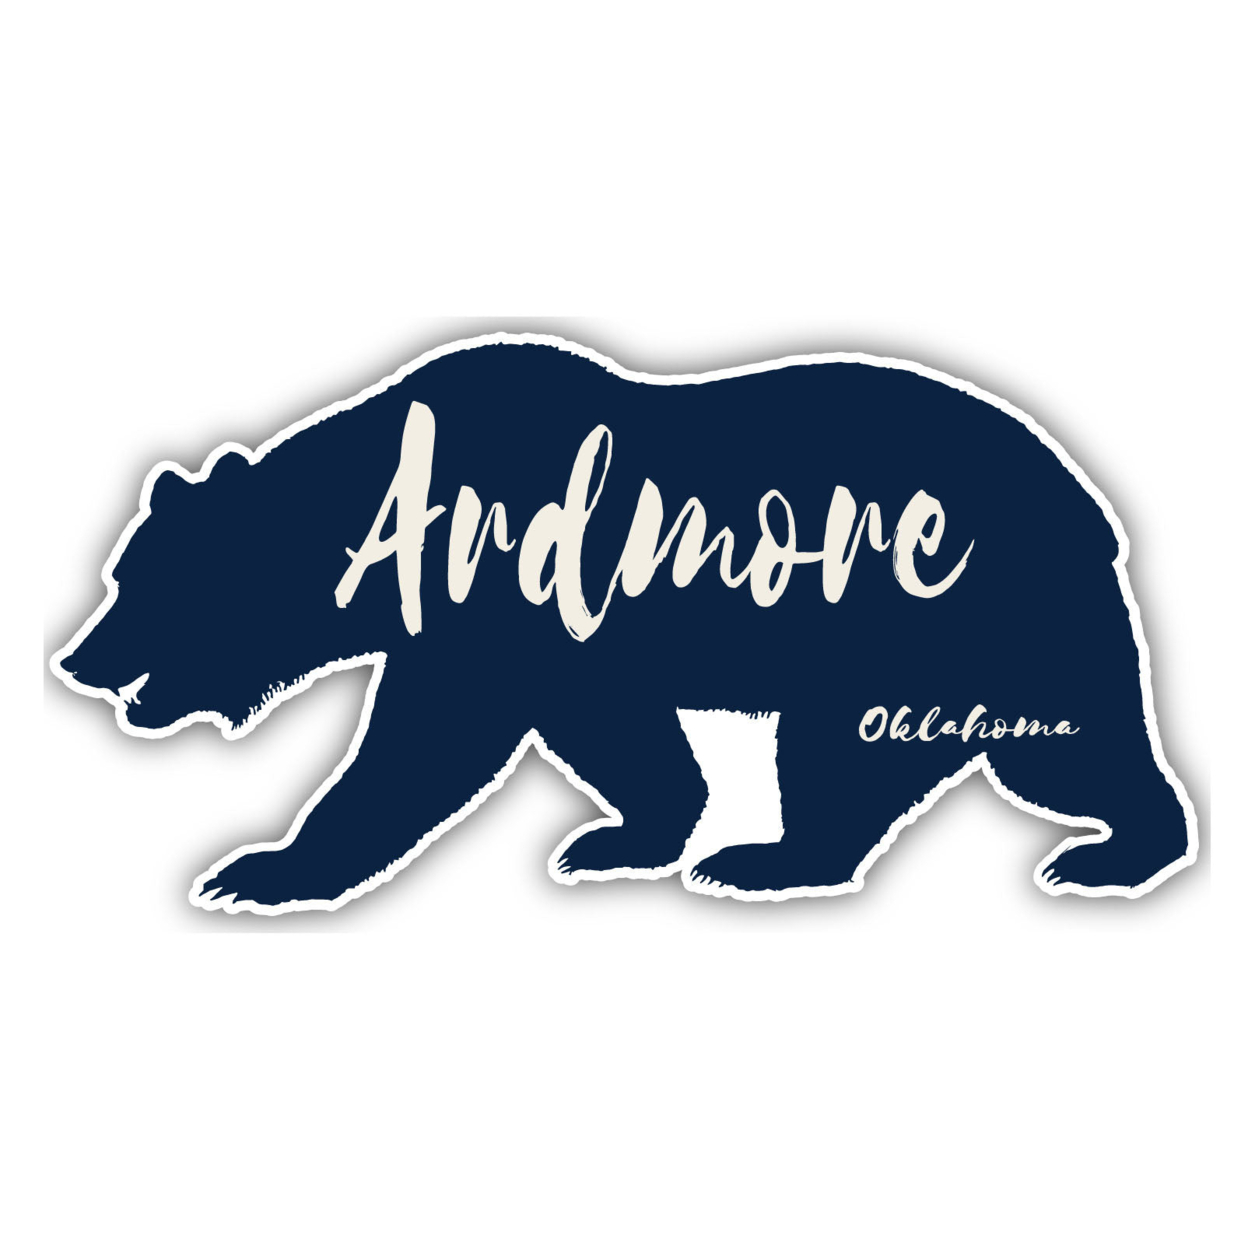 Ardmore Oklahoma Souvenir Decorative Stickers (Choose Theme And Size) - Single Unit, 4-Inch, Tent